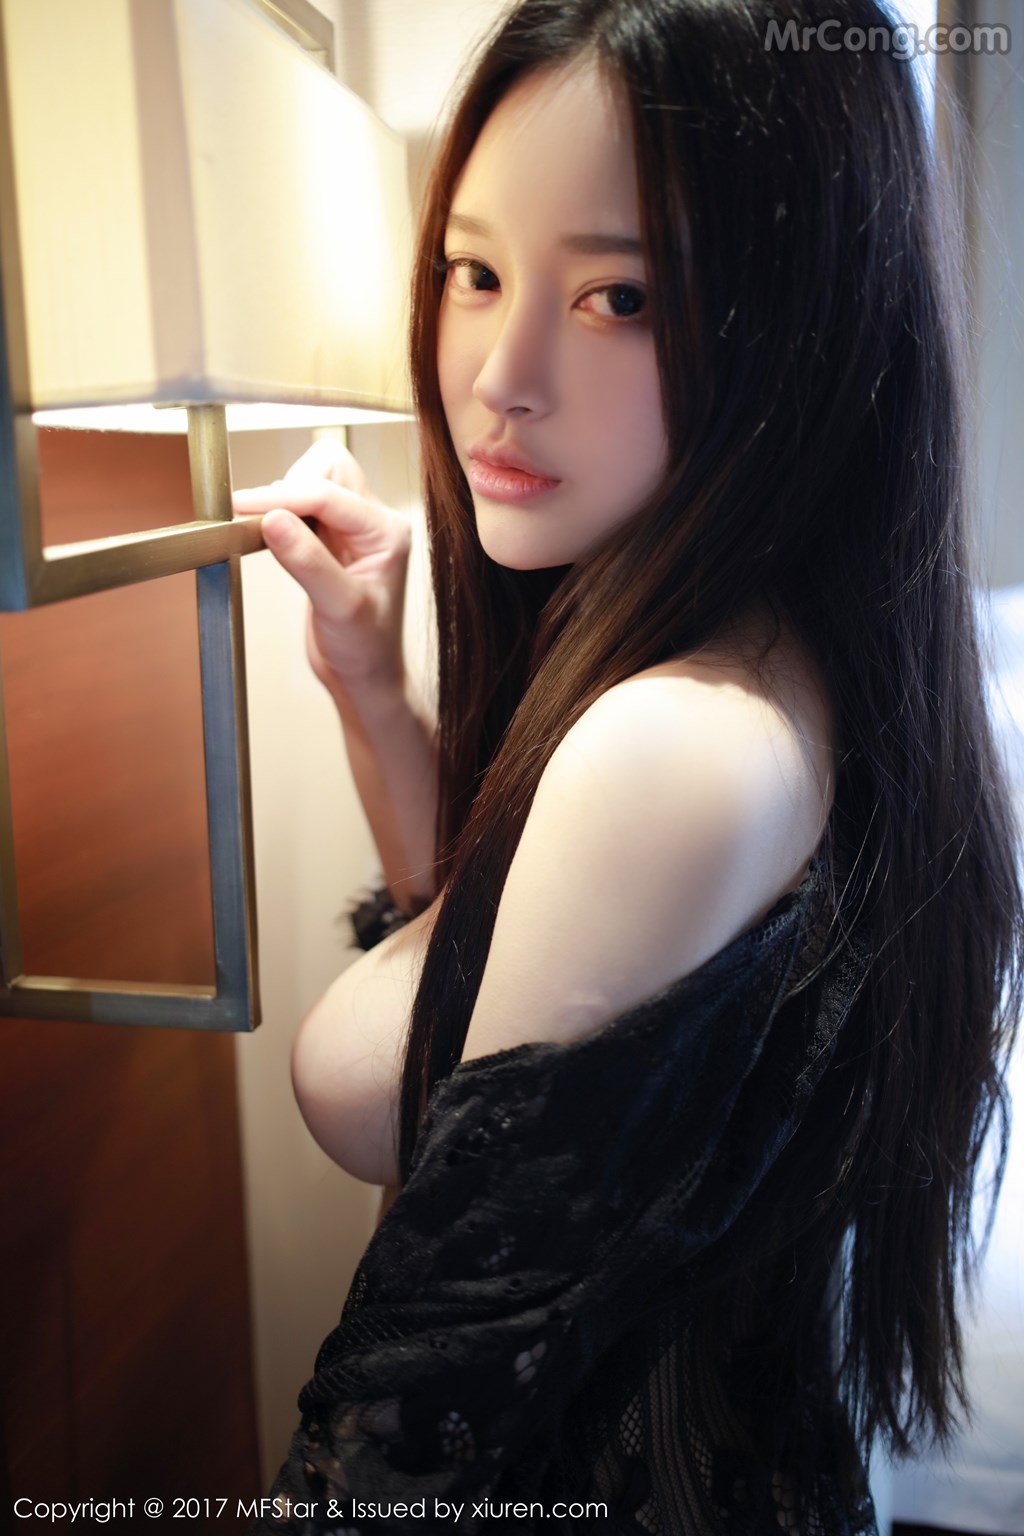 MFStar Vol.092: Model Tang Qi Er (唐琪 儿 Beauty) (52 photos)